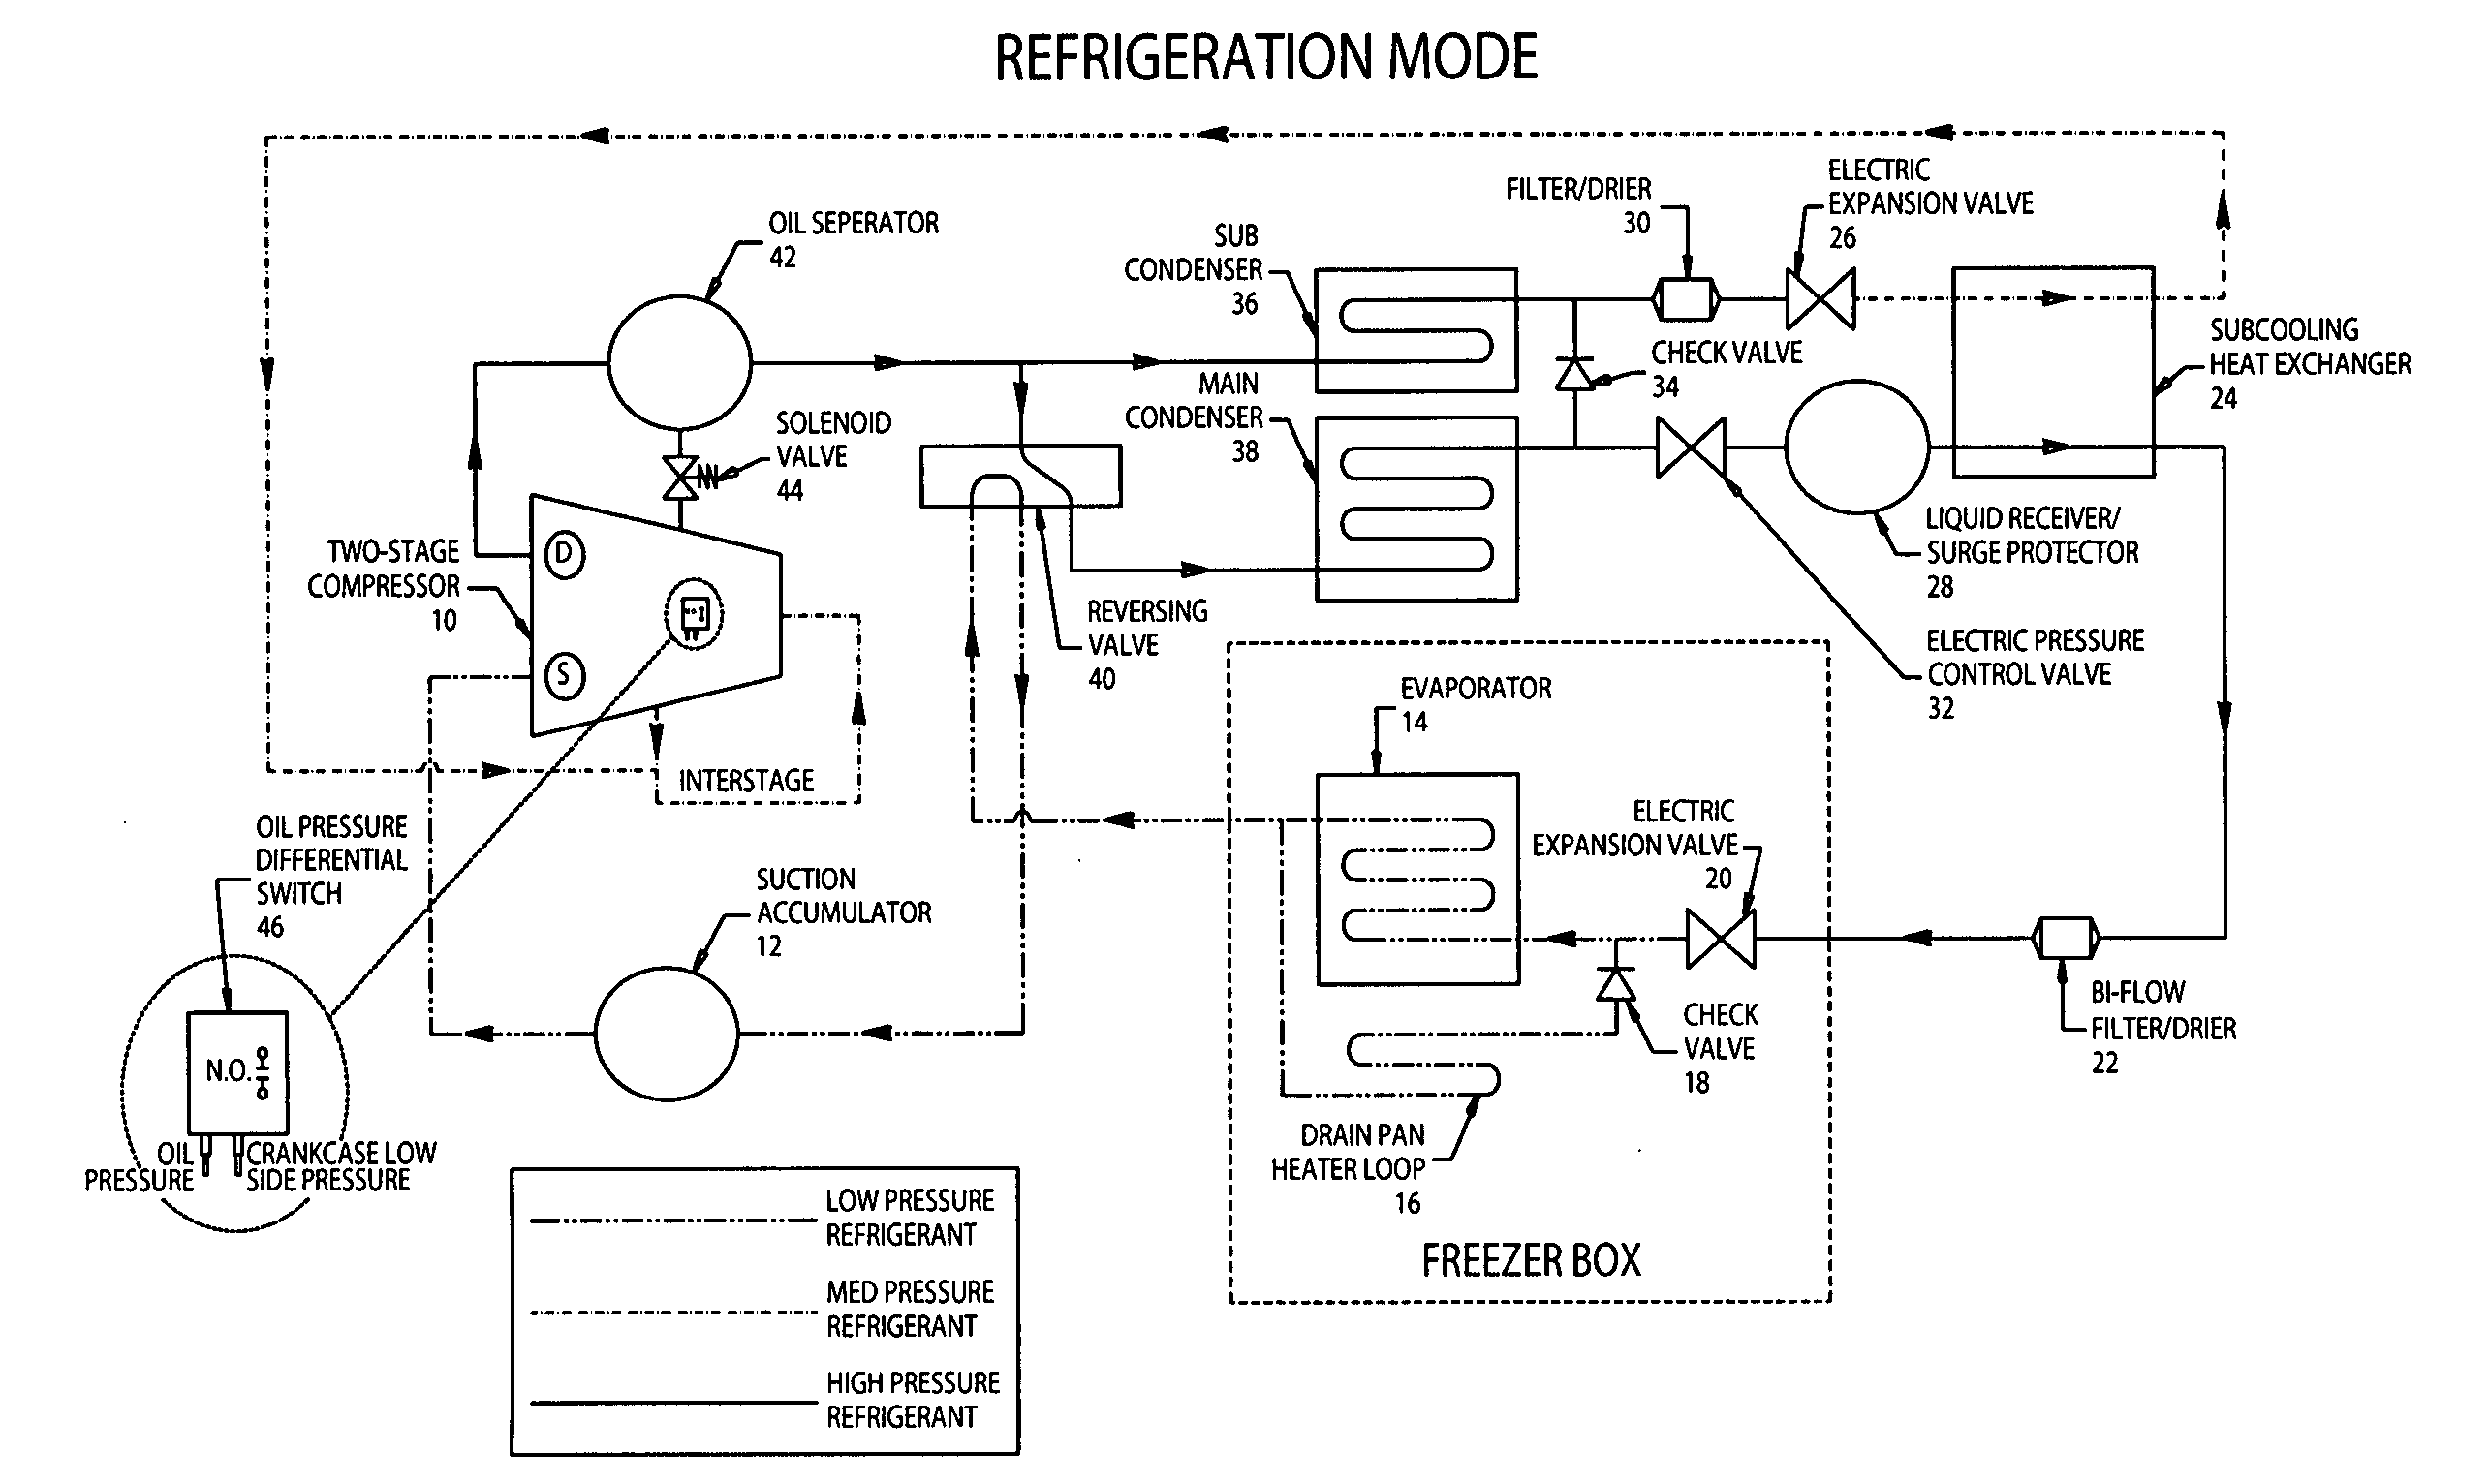 Refrigeration apparatus